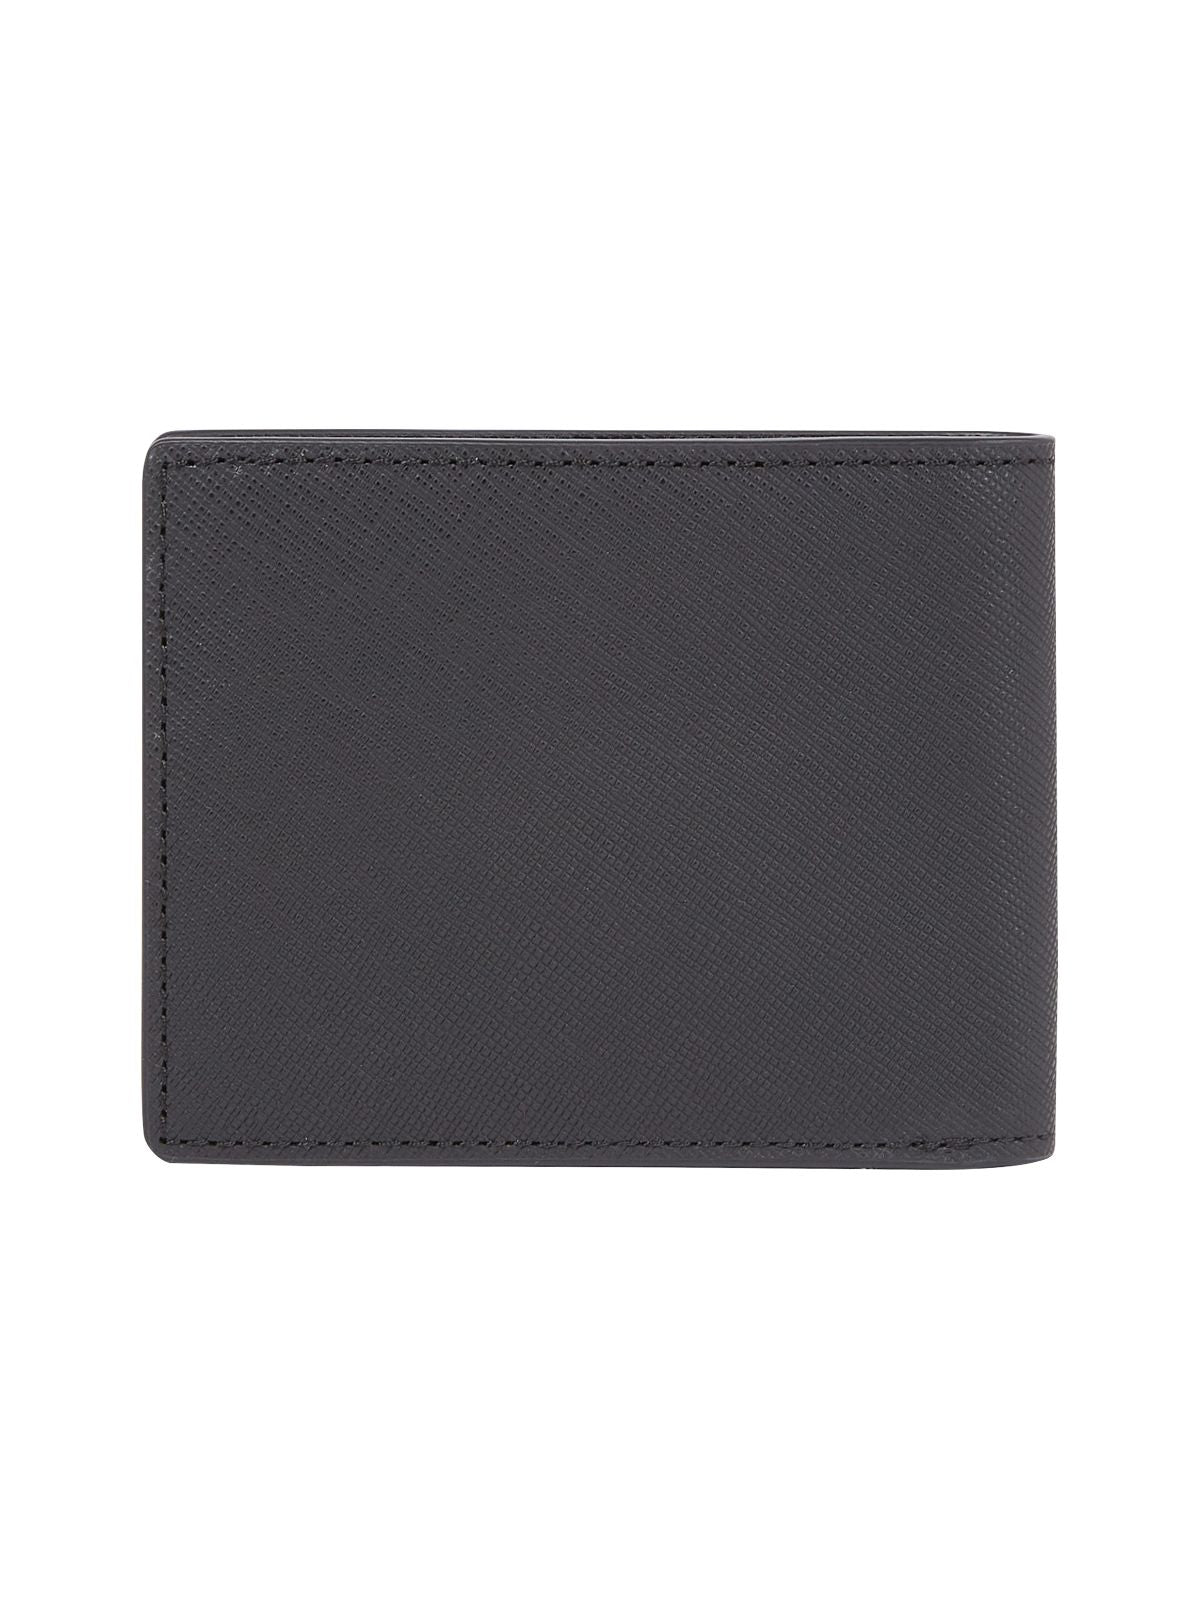 Central mini CC wallet